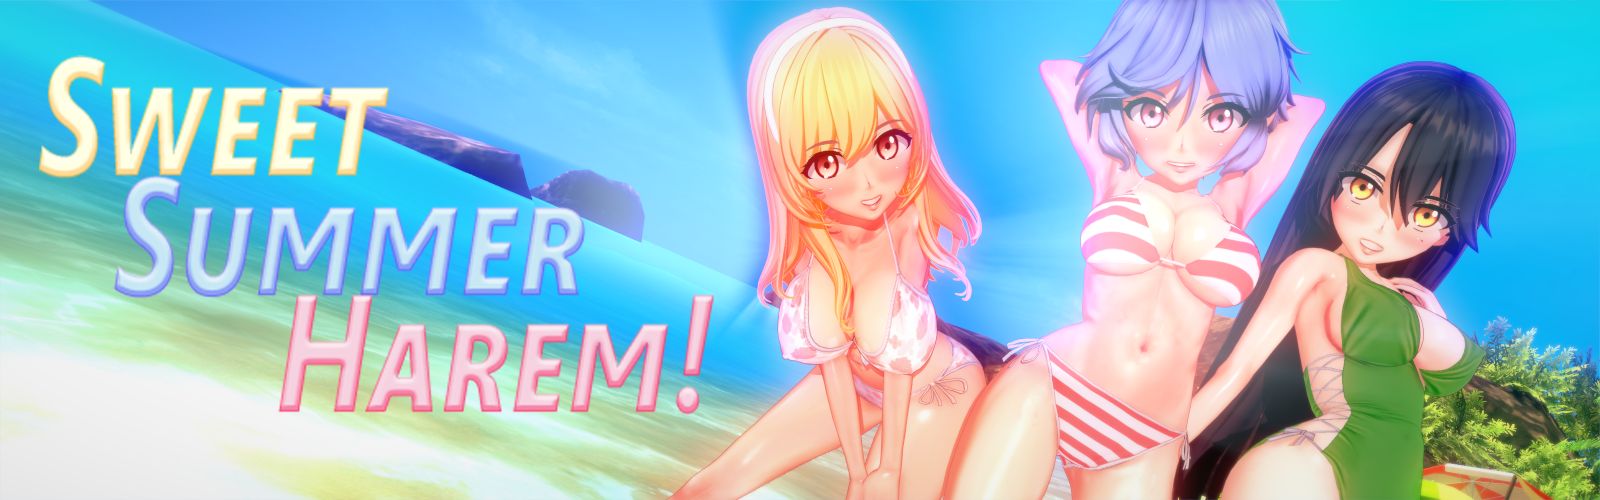 Sweet Summer Harem Apk Android Adult Game Download